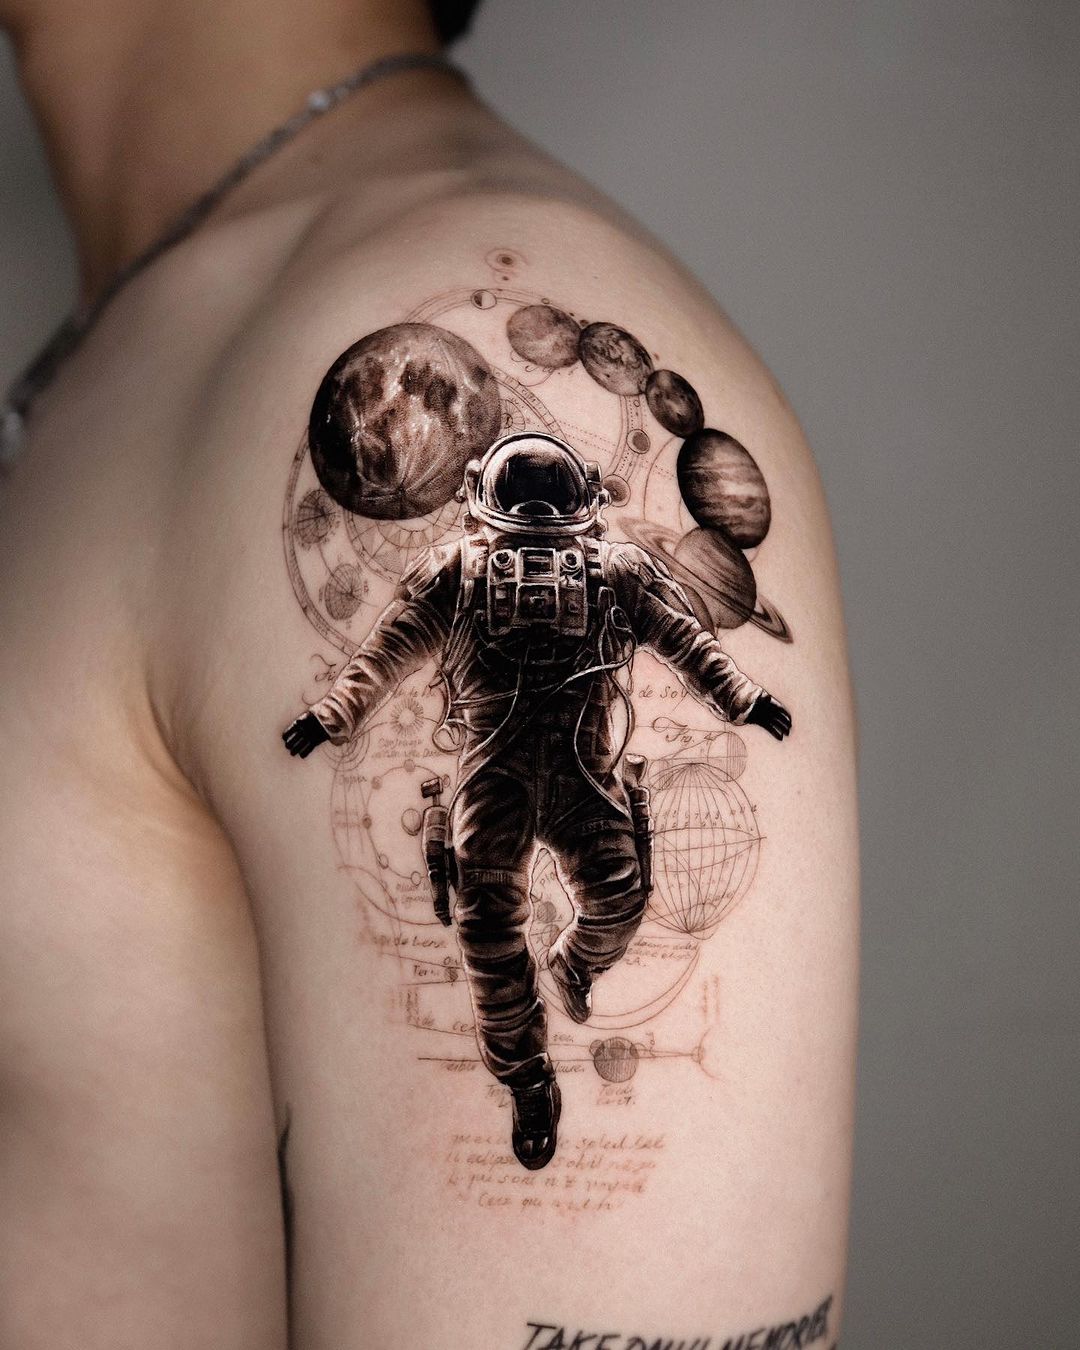 astranaut space tattoo by moco tattoo